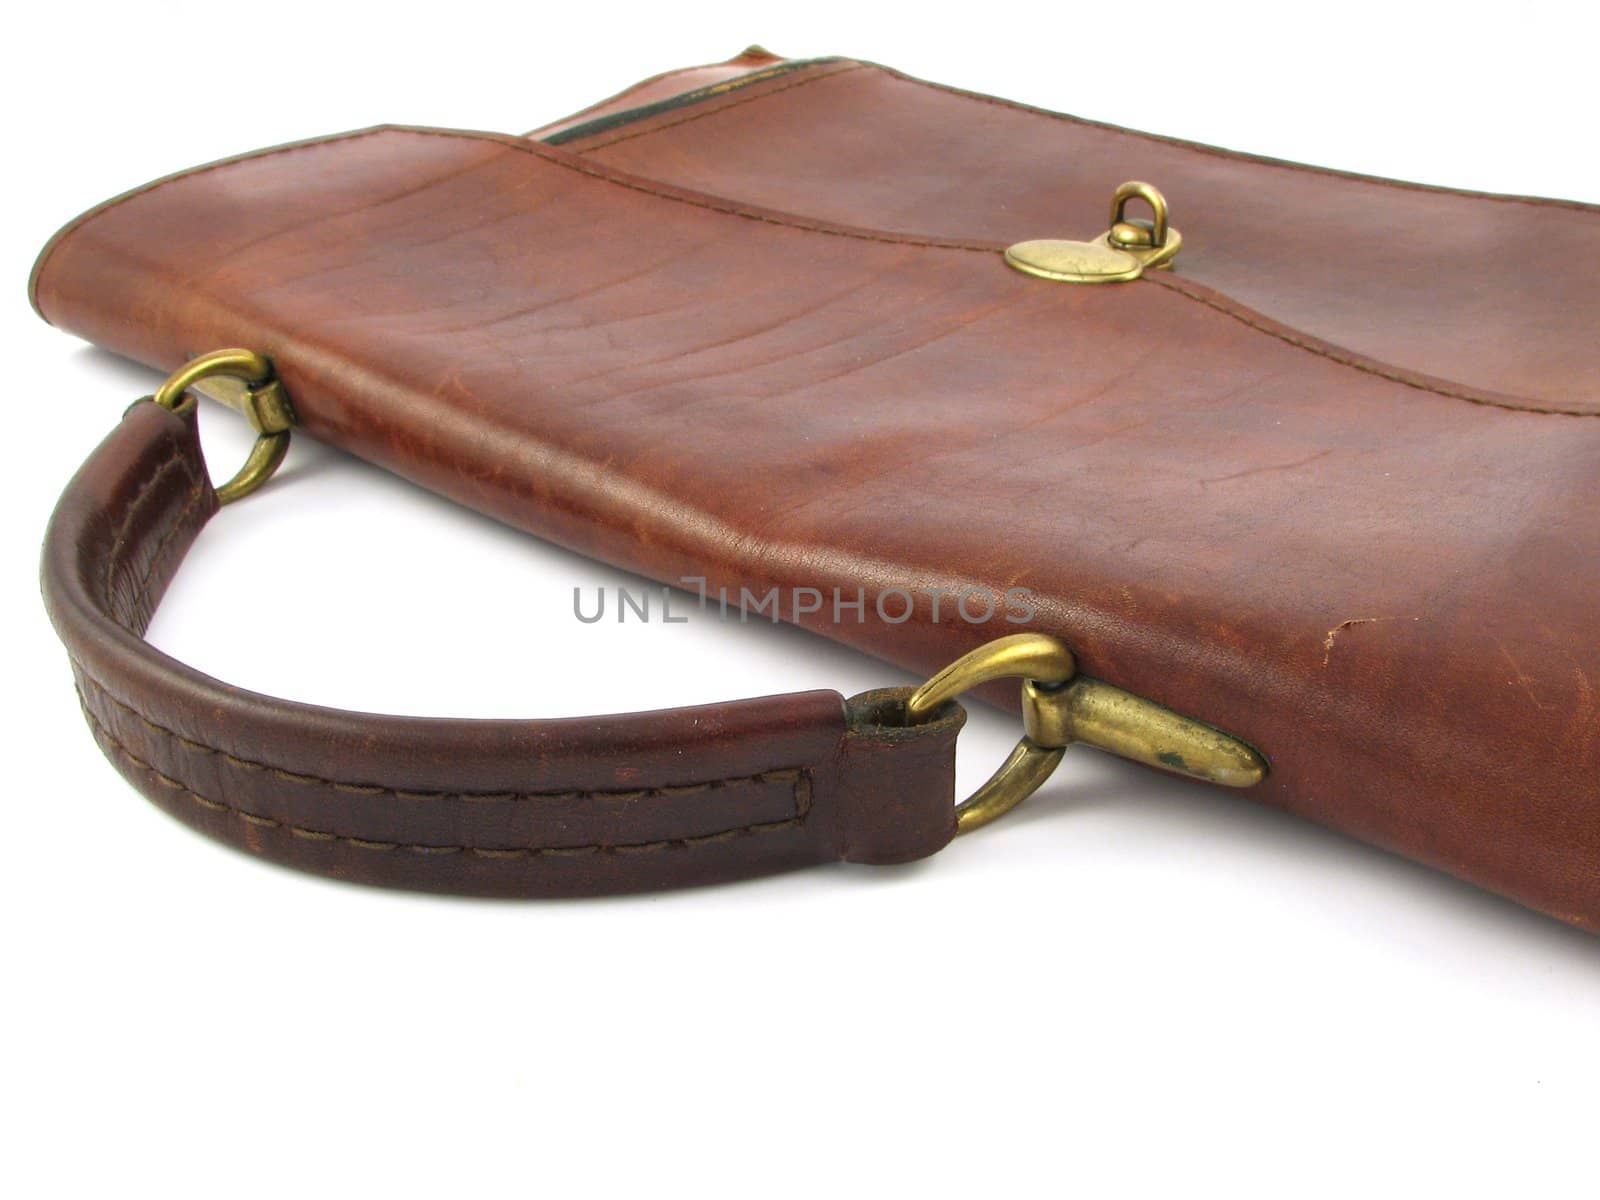 leather briefcase by alexwhite